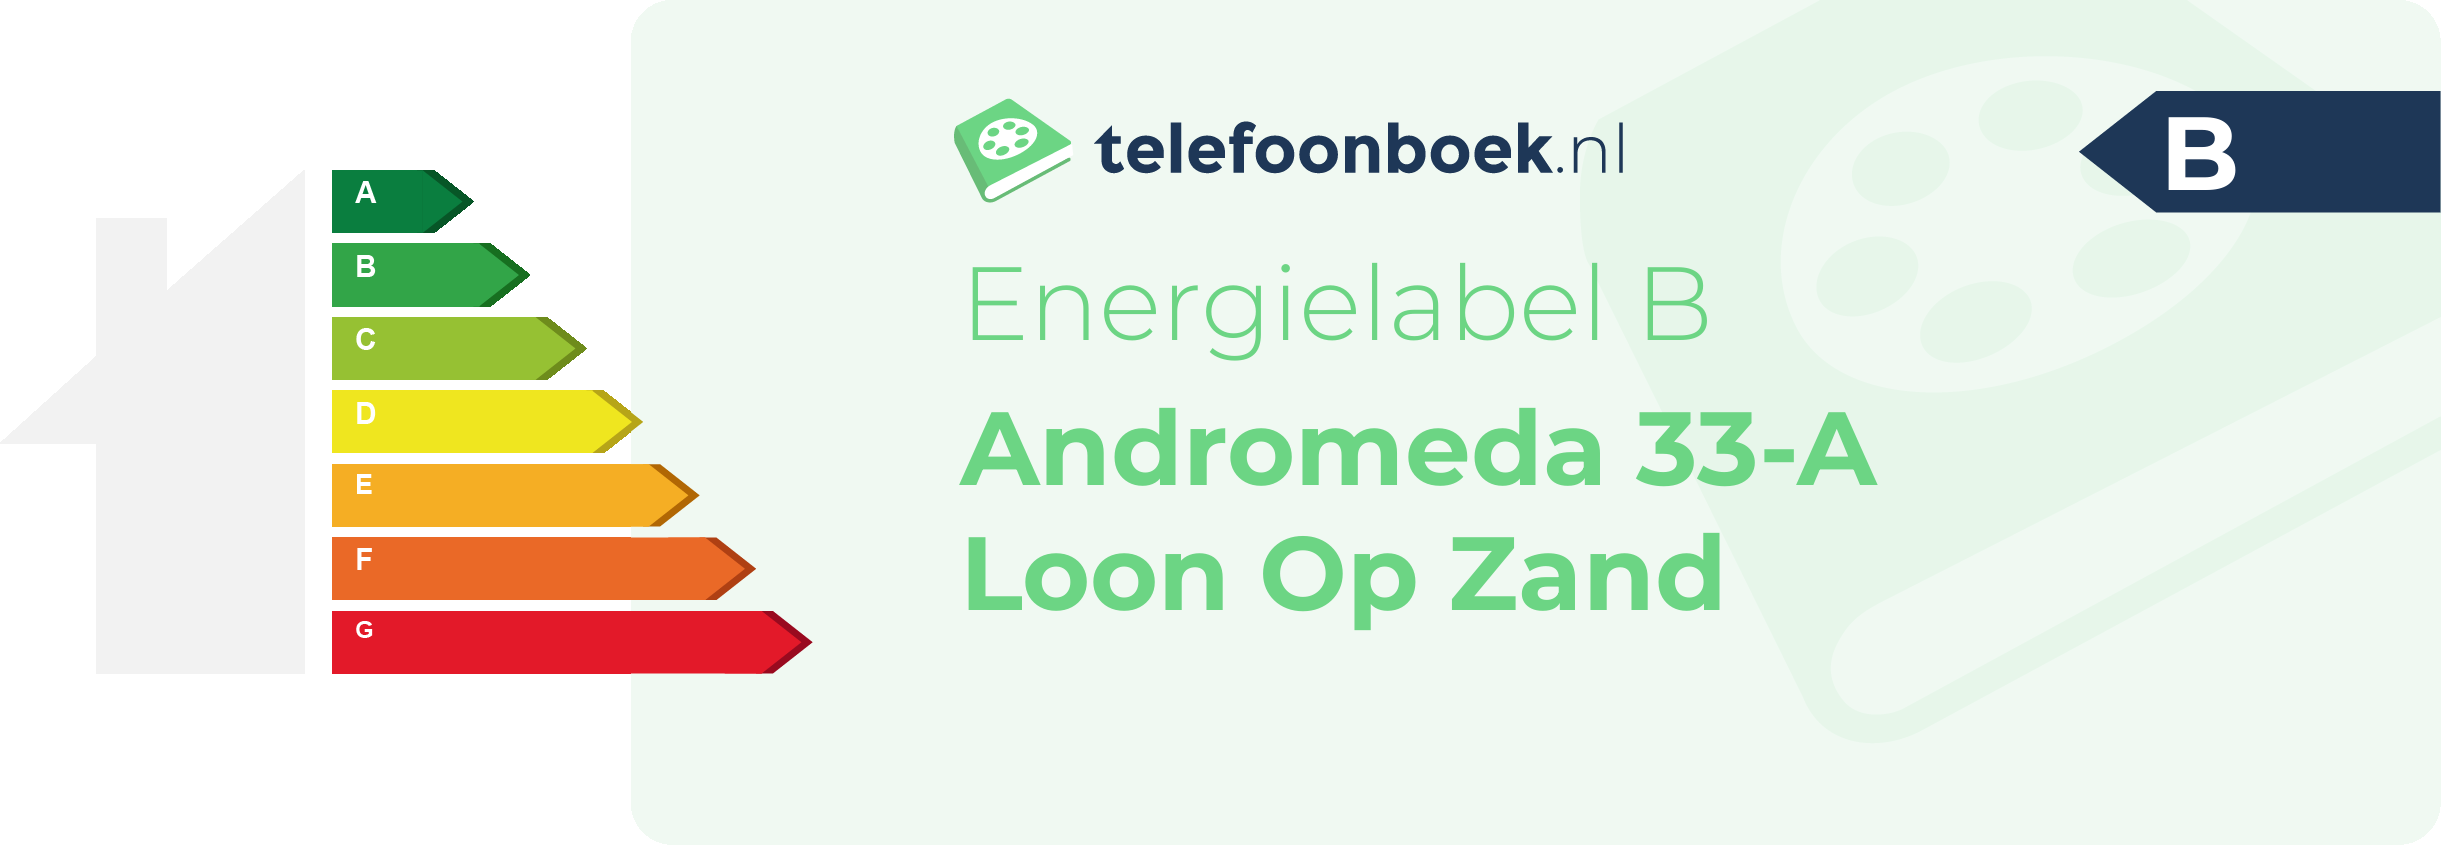 Energielabel Andromeda 33-A Loon Op Zand